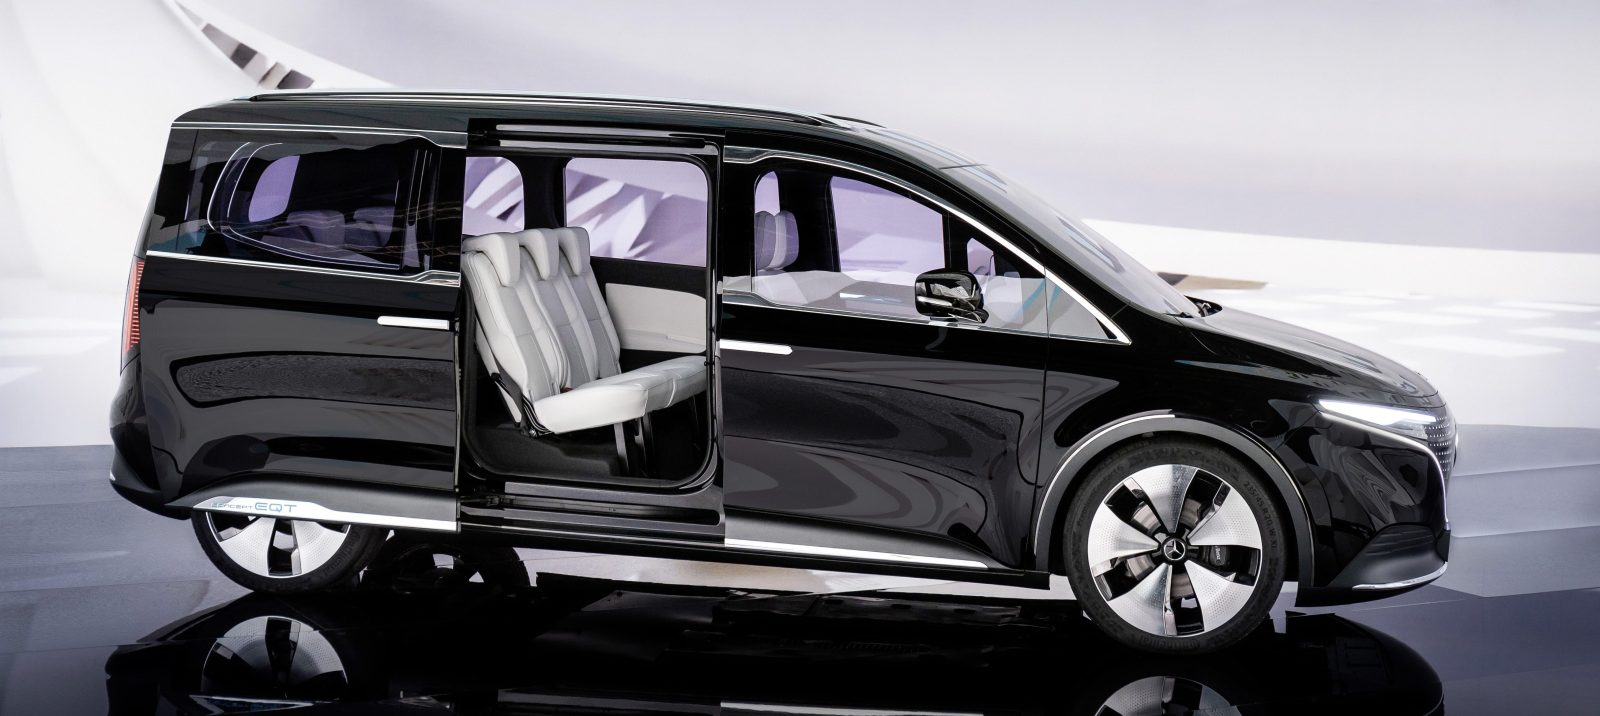 MercedesBenz unveils EQT electric minivan with interesting design